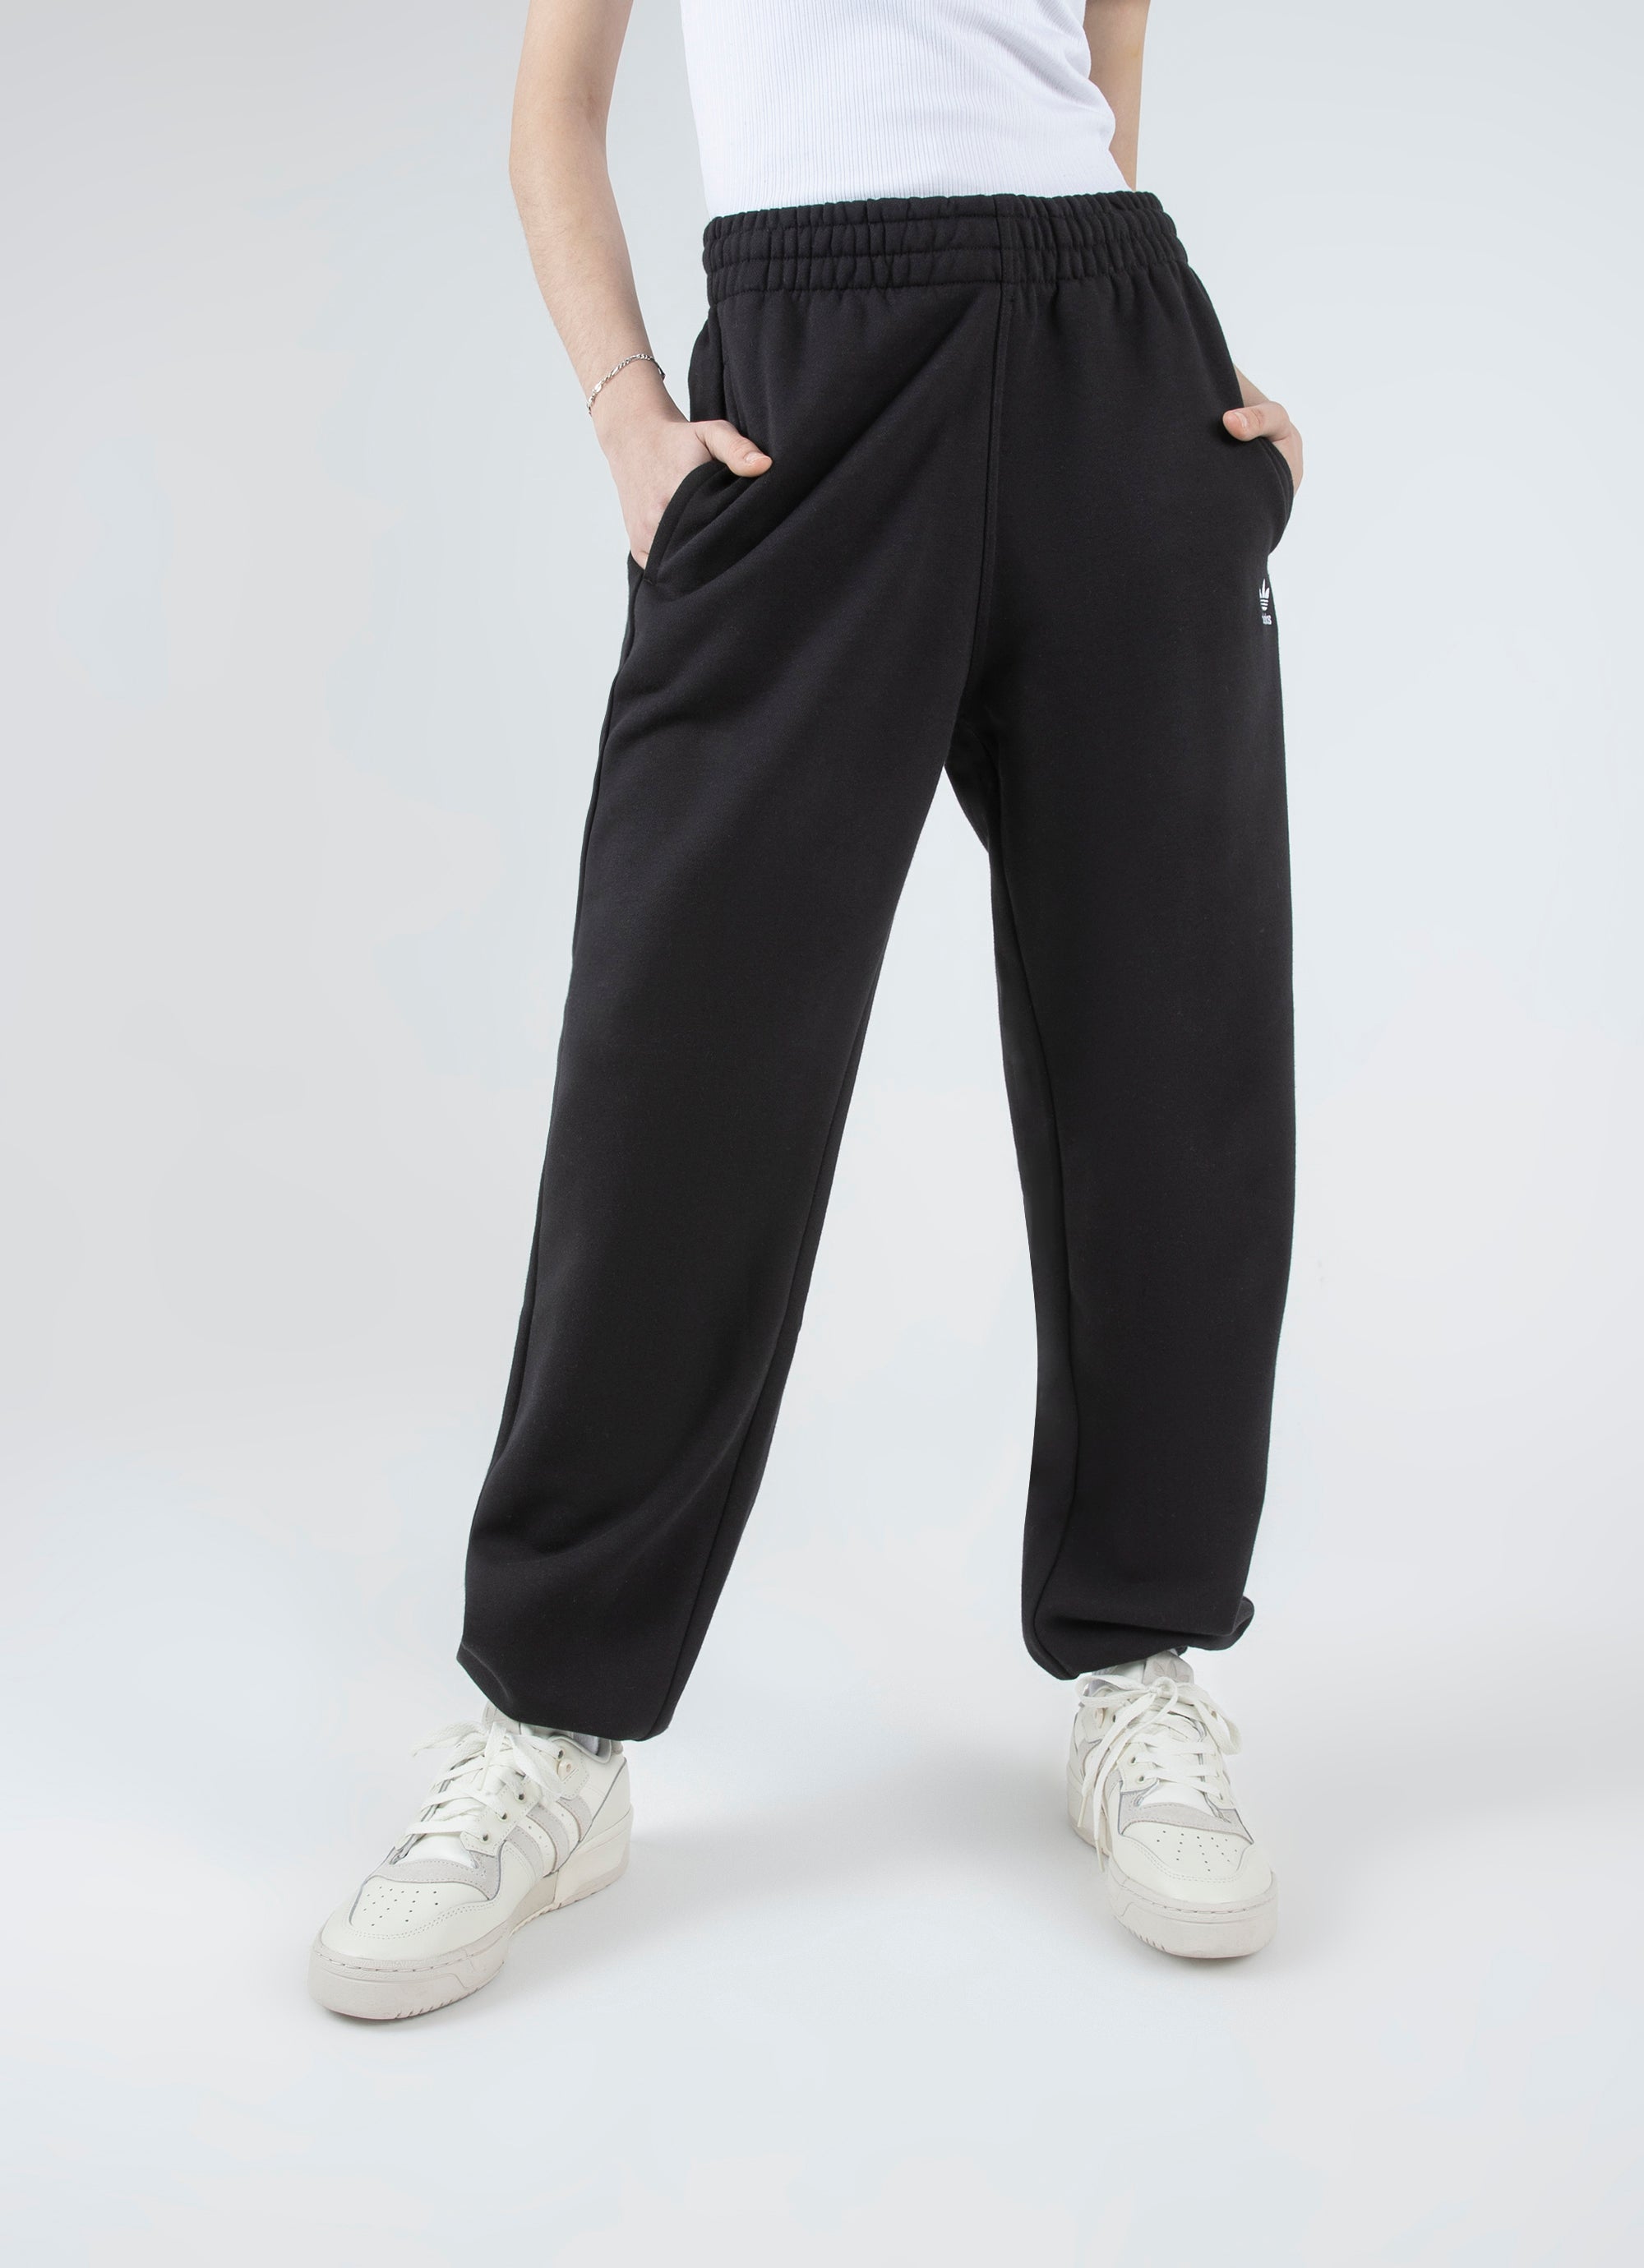 Adidas Originals Essentials Fleece Joggers - Womens in Black